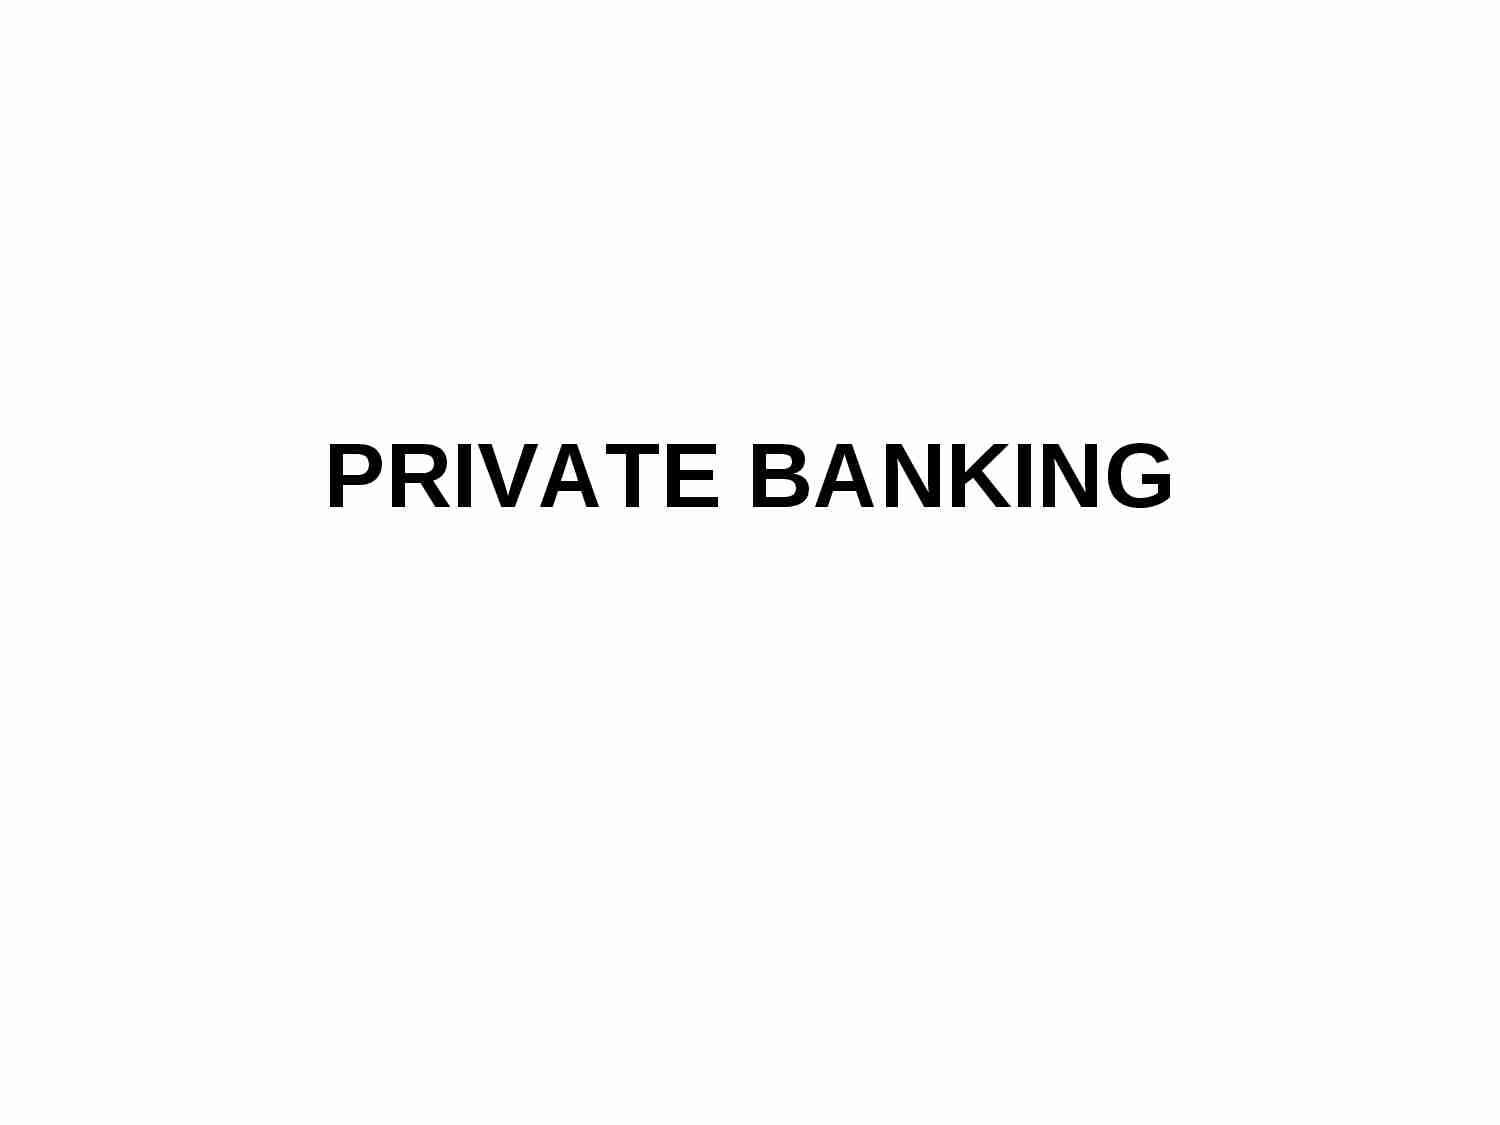 Private banking-prezentacja - strona 1